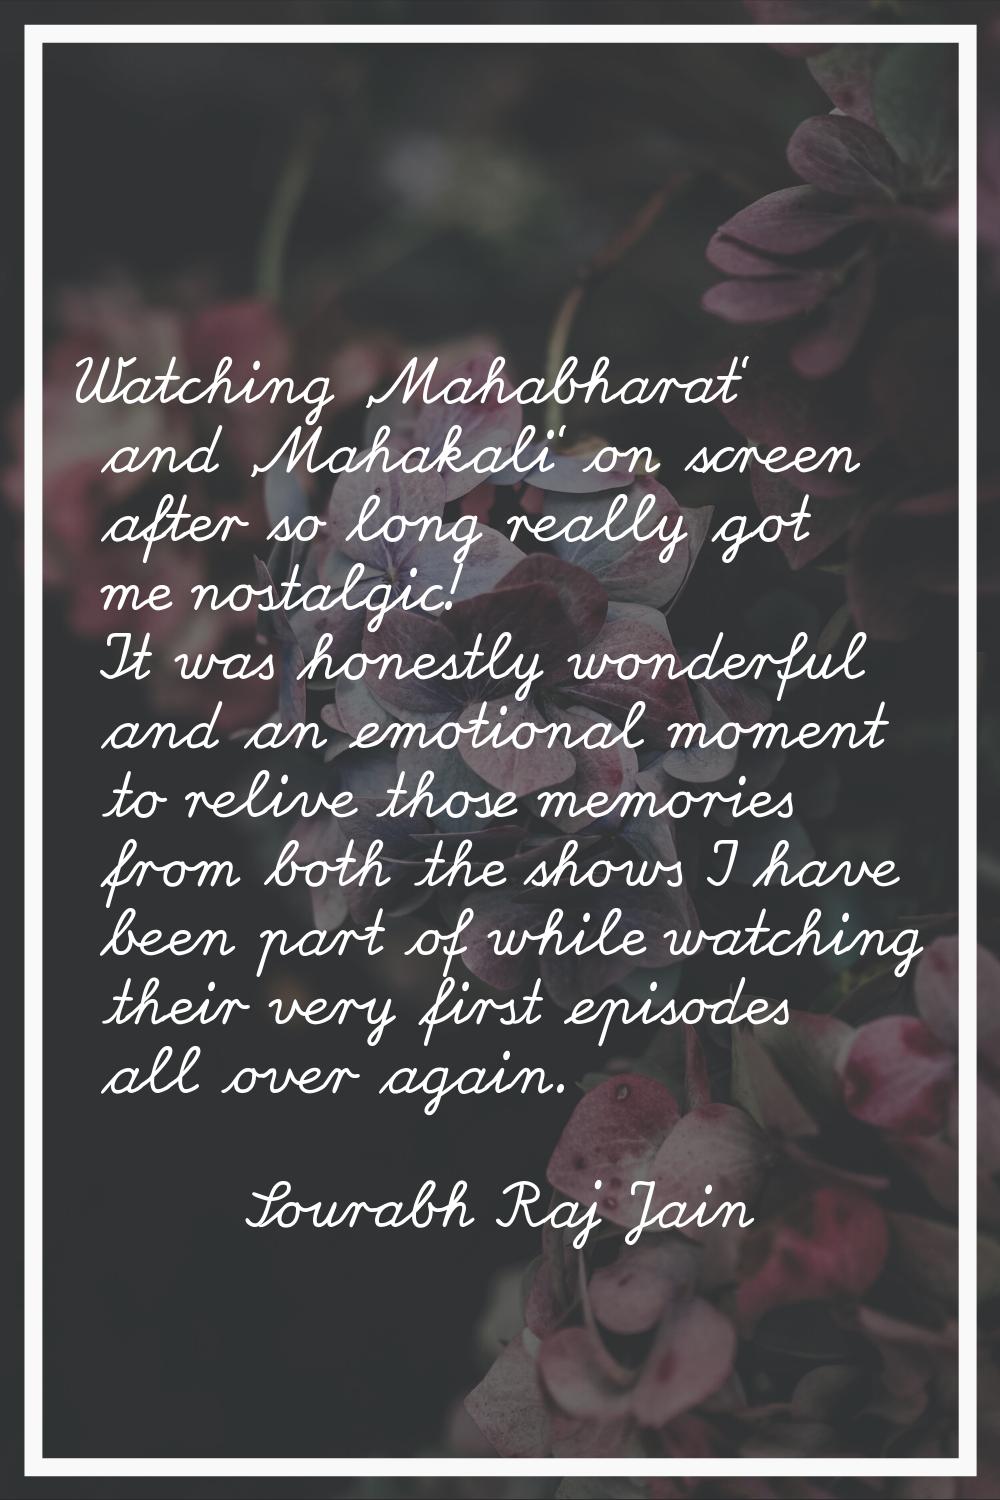 Watching 'Mahabharat' and 'Mahakali' on screen after so long really got me nostalgic! It was honest